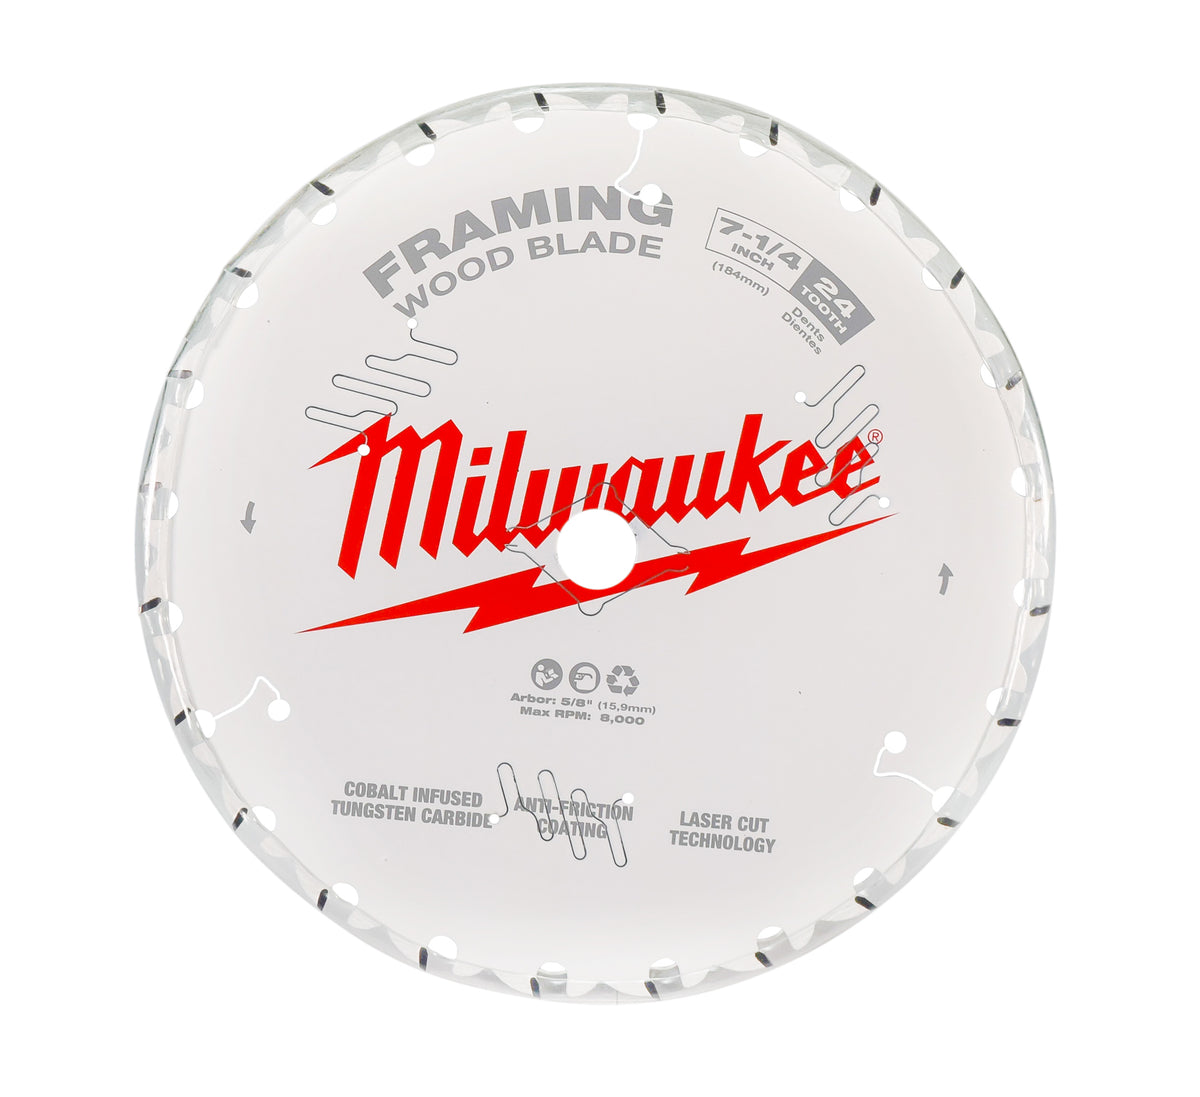 Milwaukee 48-41-0720 7-1/4 in. x 24-Tooth Framing Circular Saw Blade